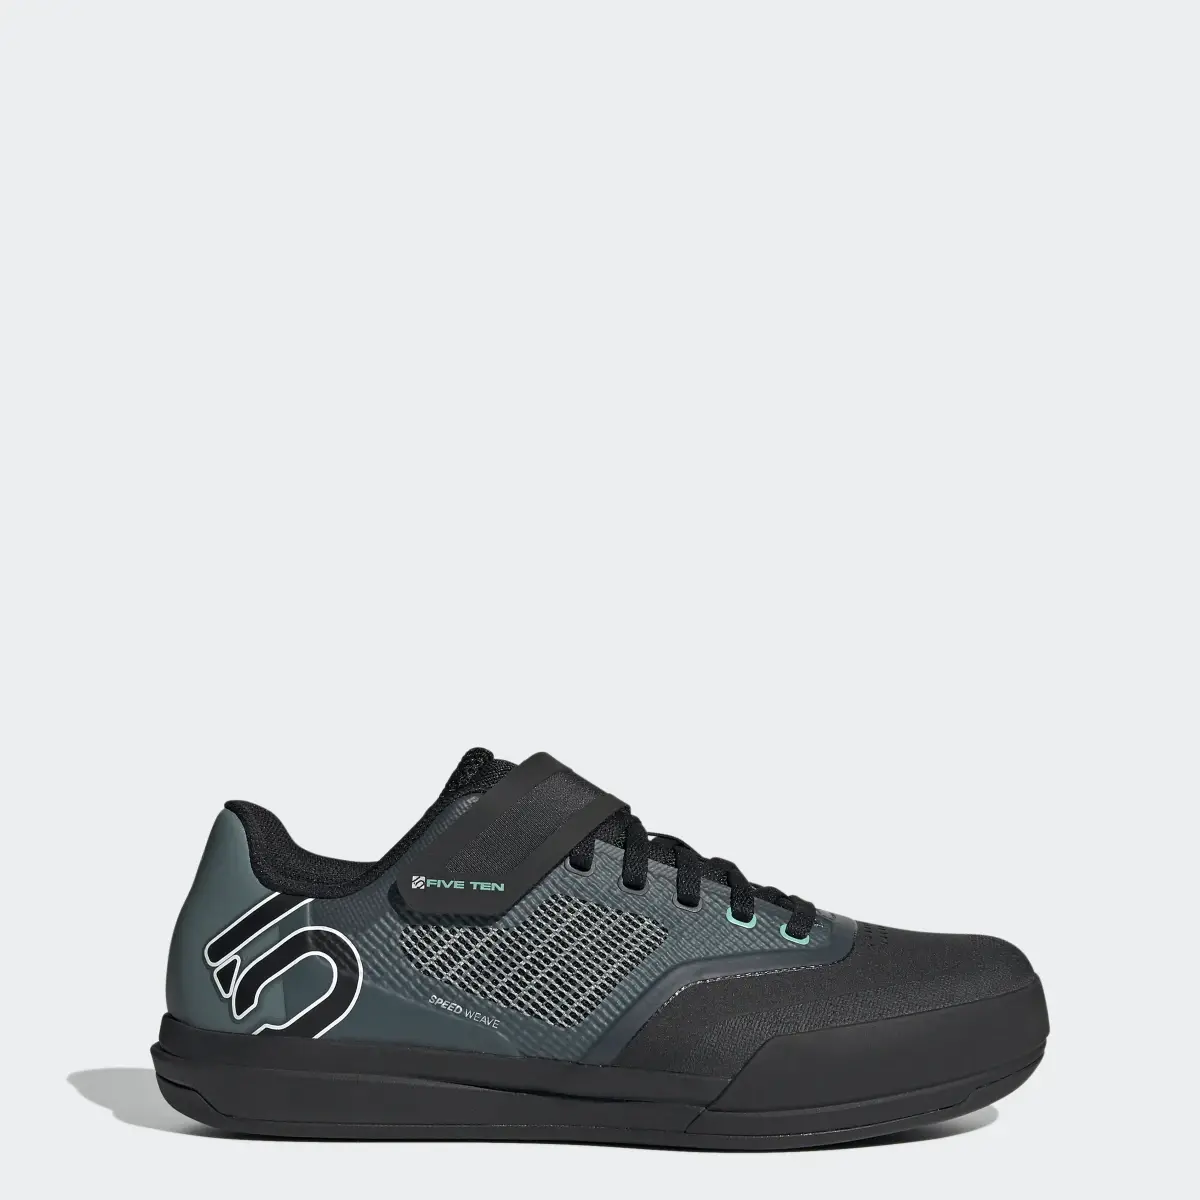 Adidas Sapatos de BTT Hellcat Pro Five Ten. 1